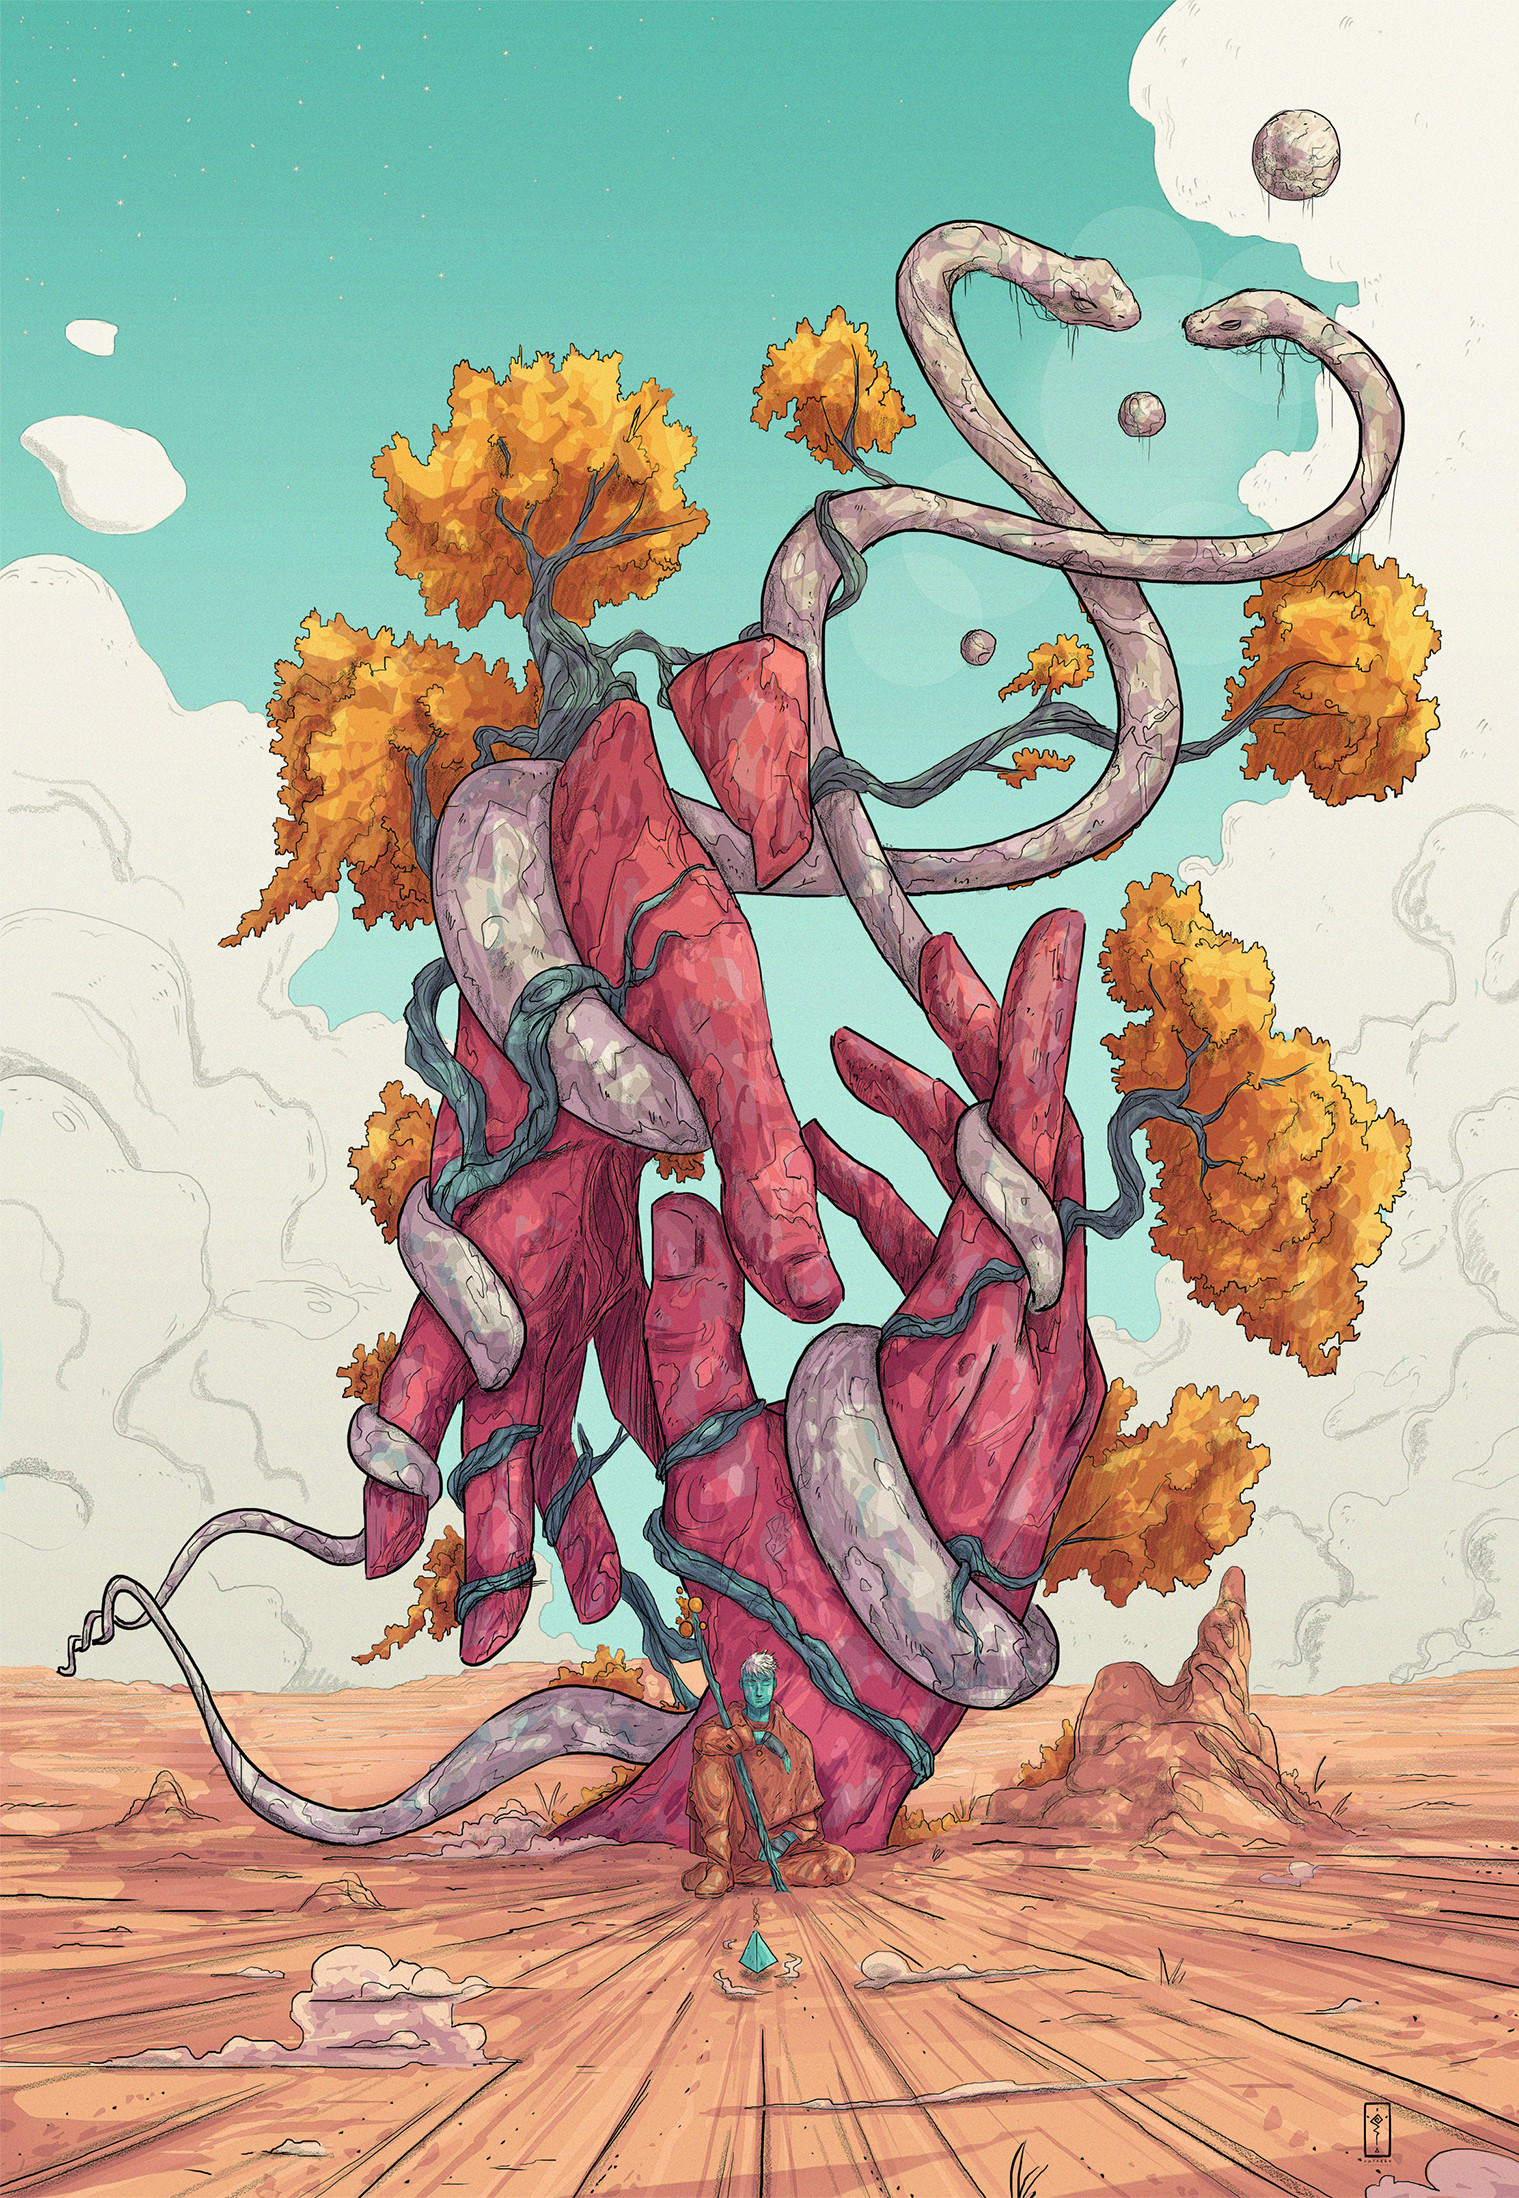 Christian Benavides Digital Art Fantasy Art Surreal Desert Snakes Trees Hands Clouds 1519x2198